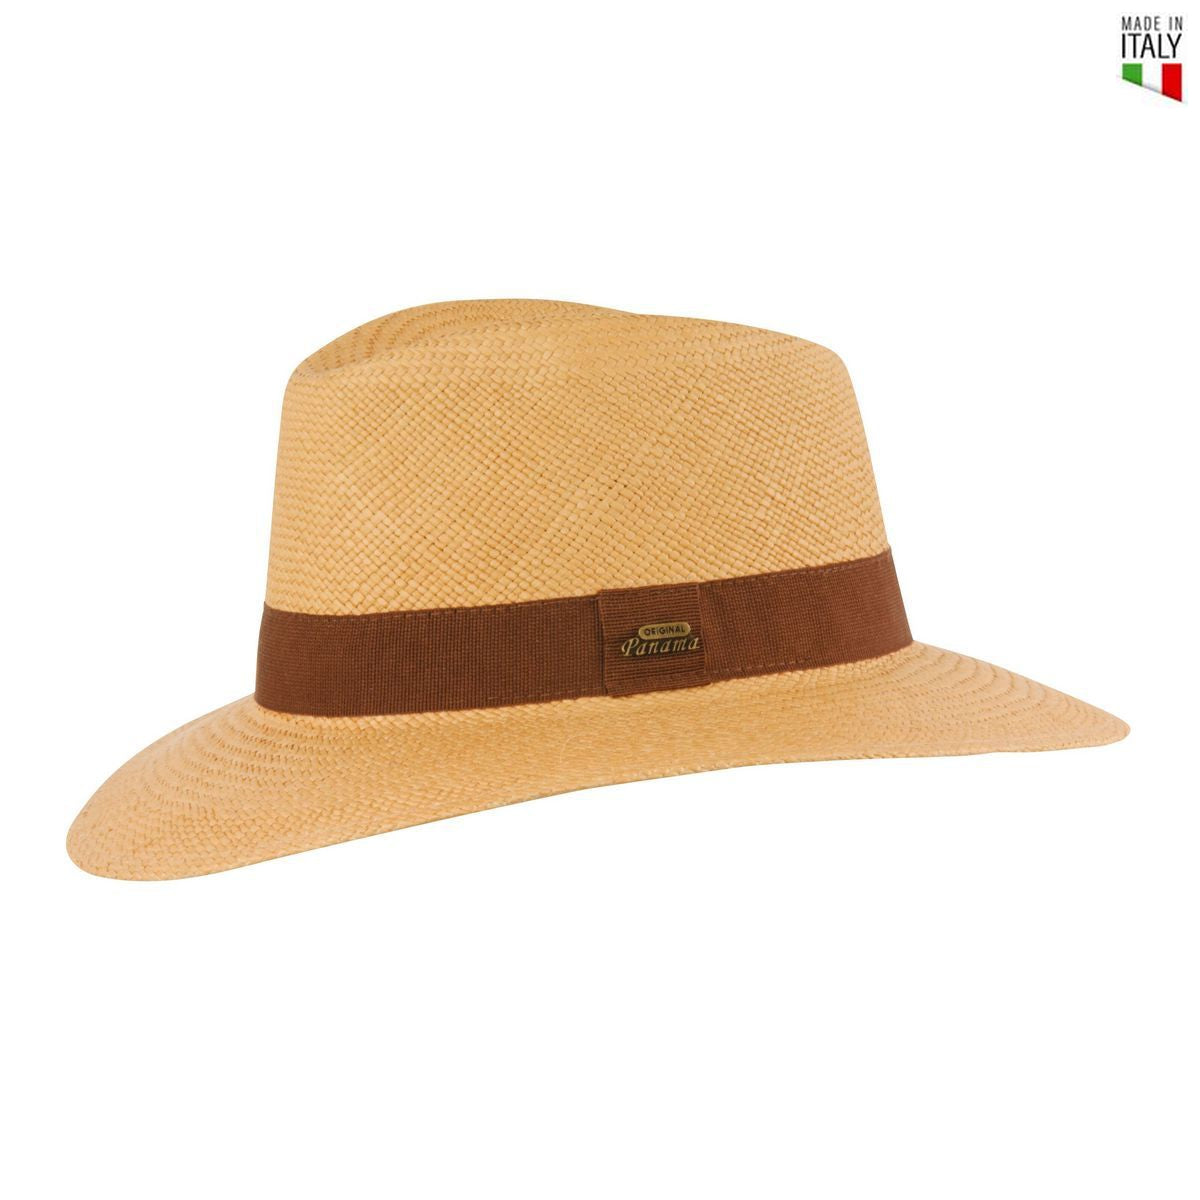 MJM Franco Panama Hat - Biscotto - Hat fra MJM Hats hos The Prince Webshop